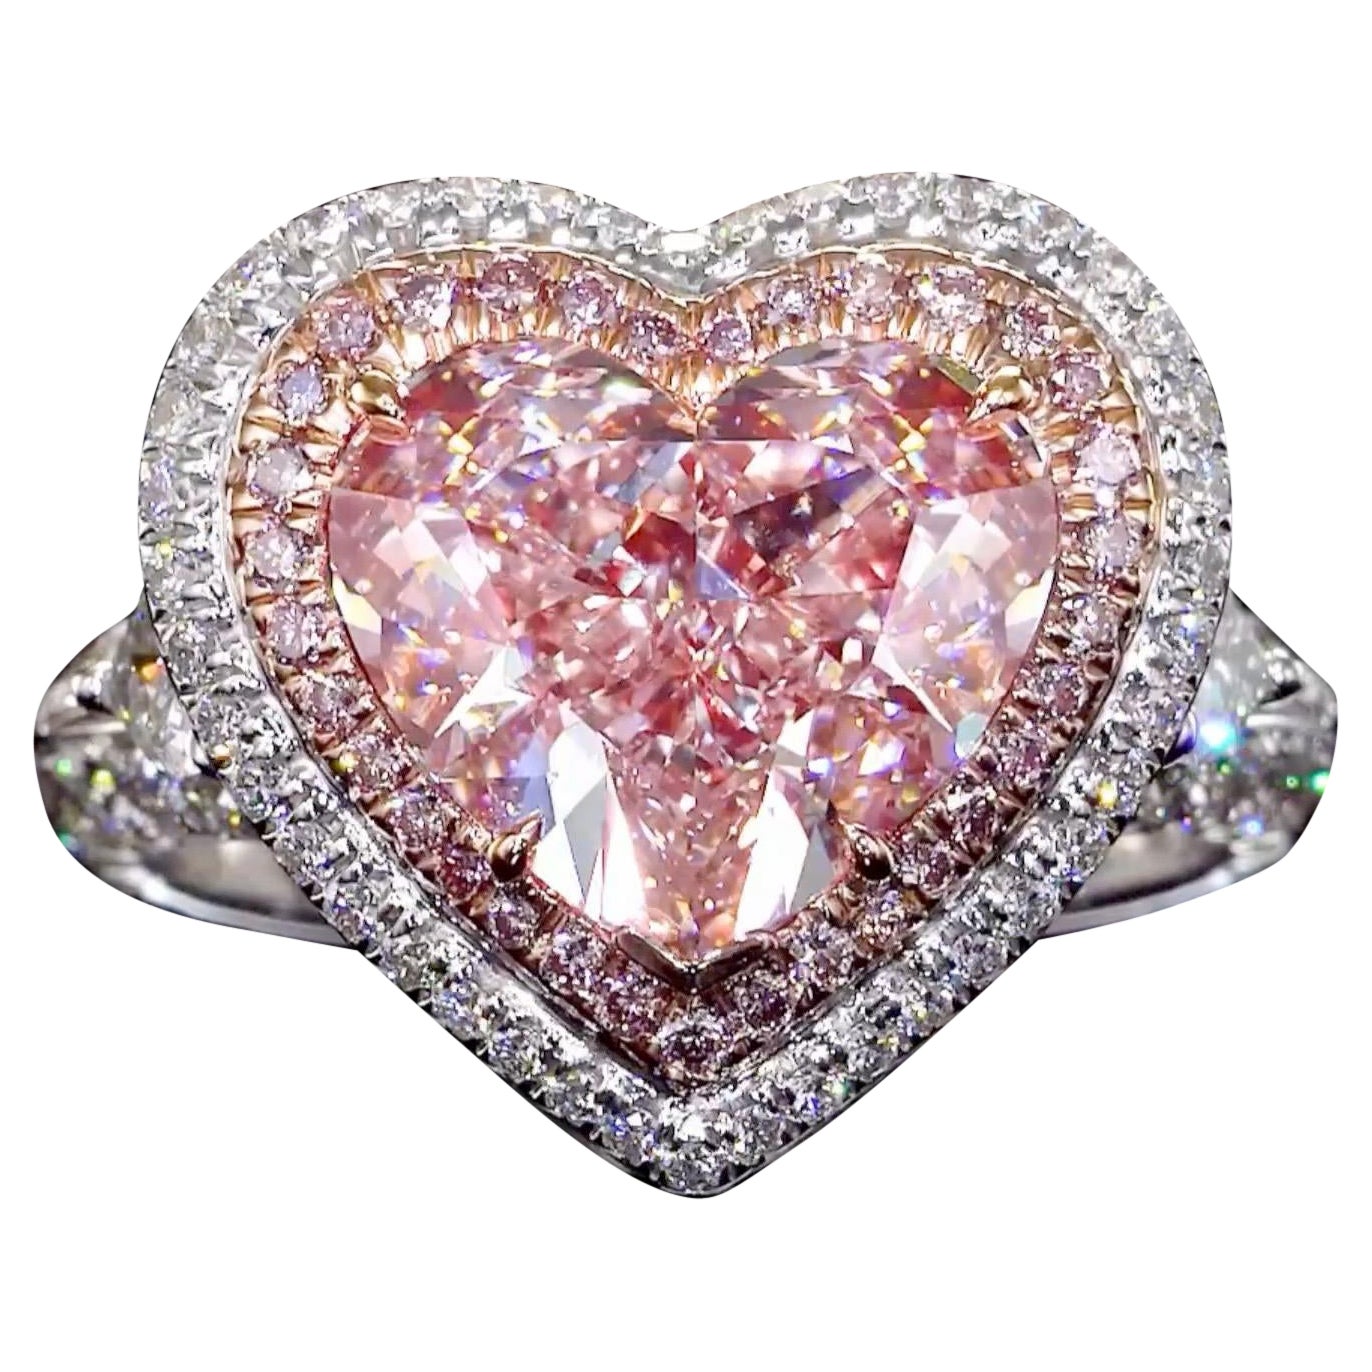 Emilio Jewelry Gia Certified 4.50 Carat Internally Flawless Pink Diamond Ring For Sale